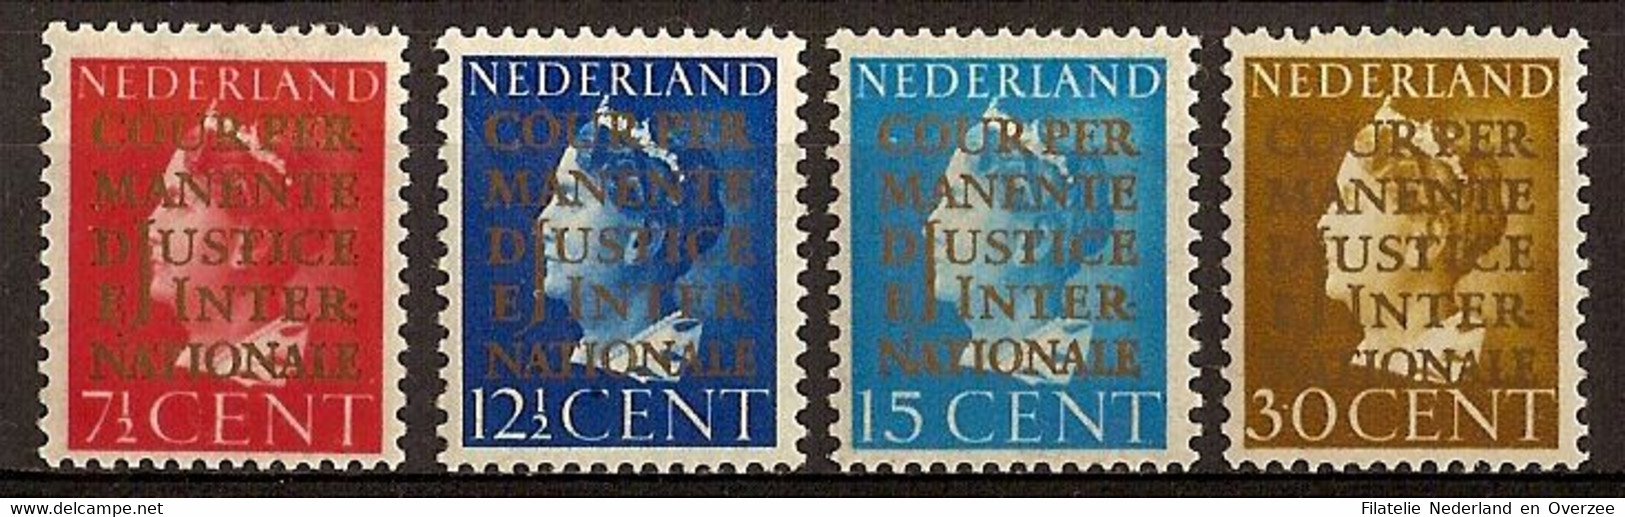 Nederland 1940 Dienst 16/19 Ongebruikt/MH  Cour Permanente De Justice, Service Stamps. - Servizio